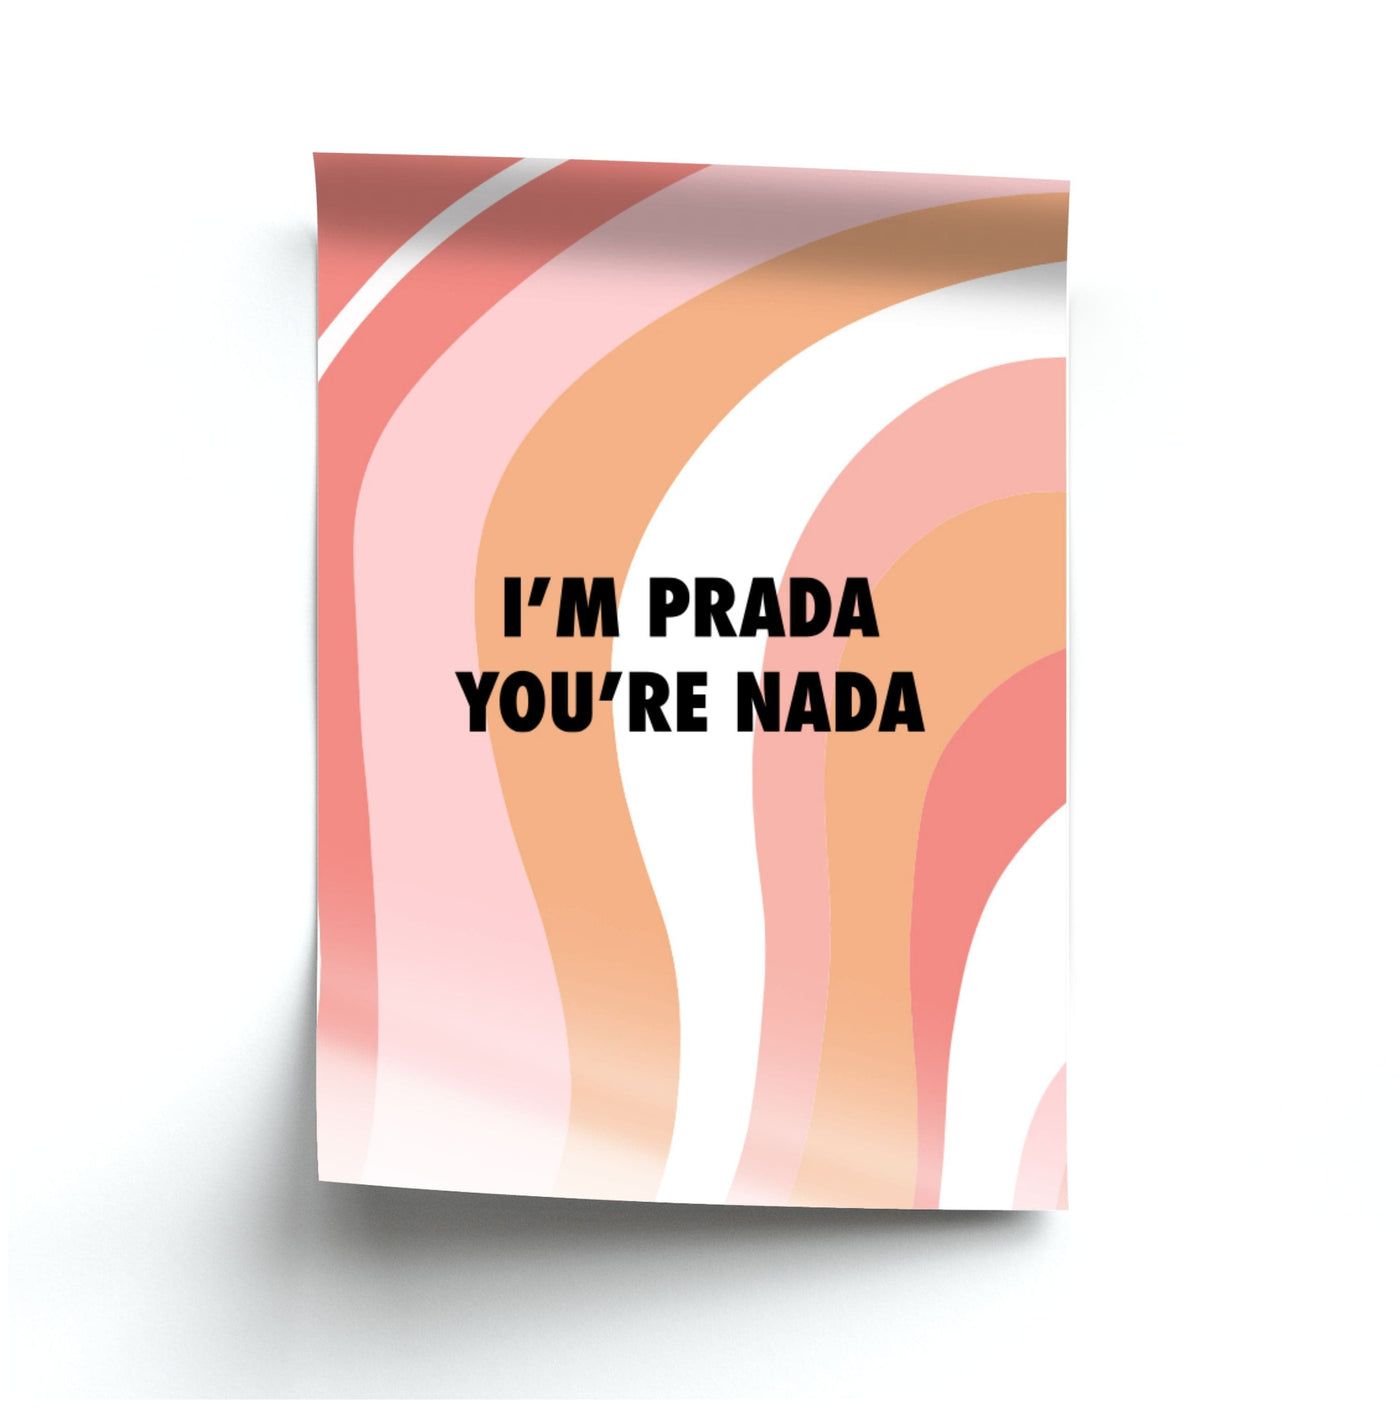 Im Prada You're Nada - Sassy Quotes Poster